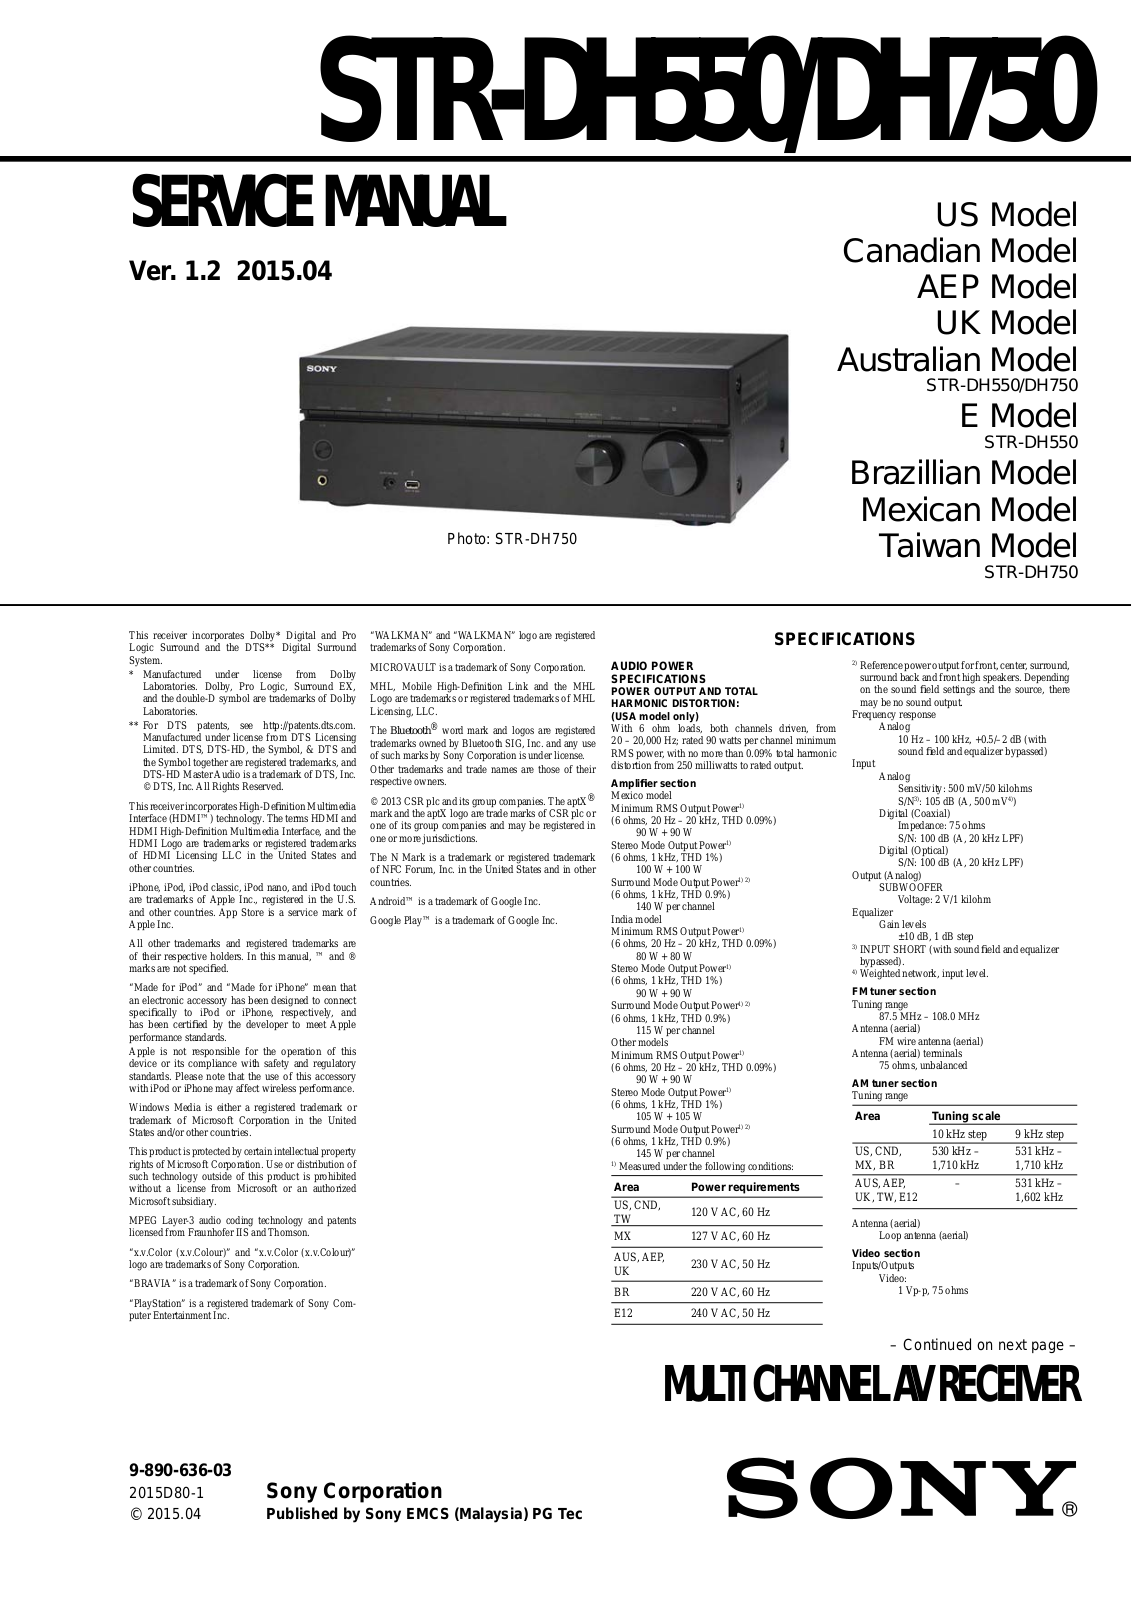 Sony STR-DH550, STR-DH570 Service manual